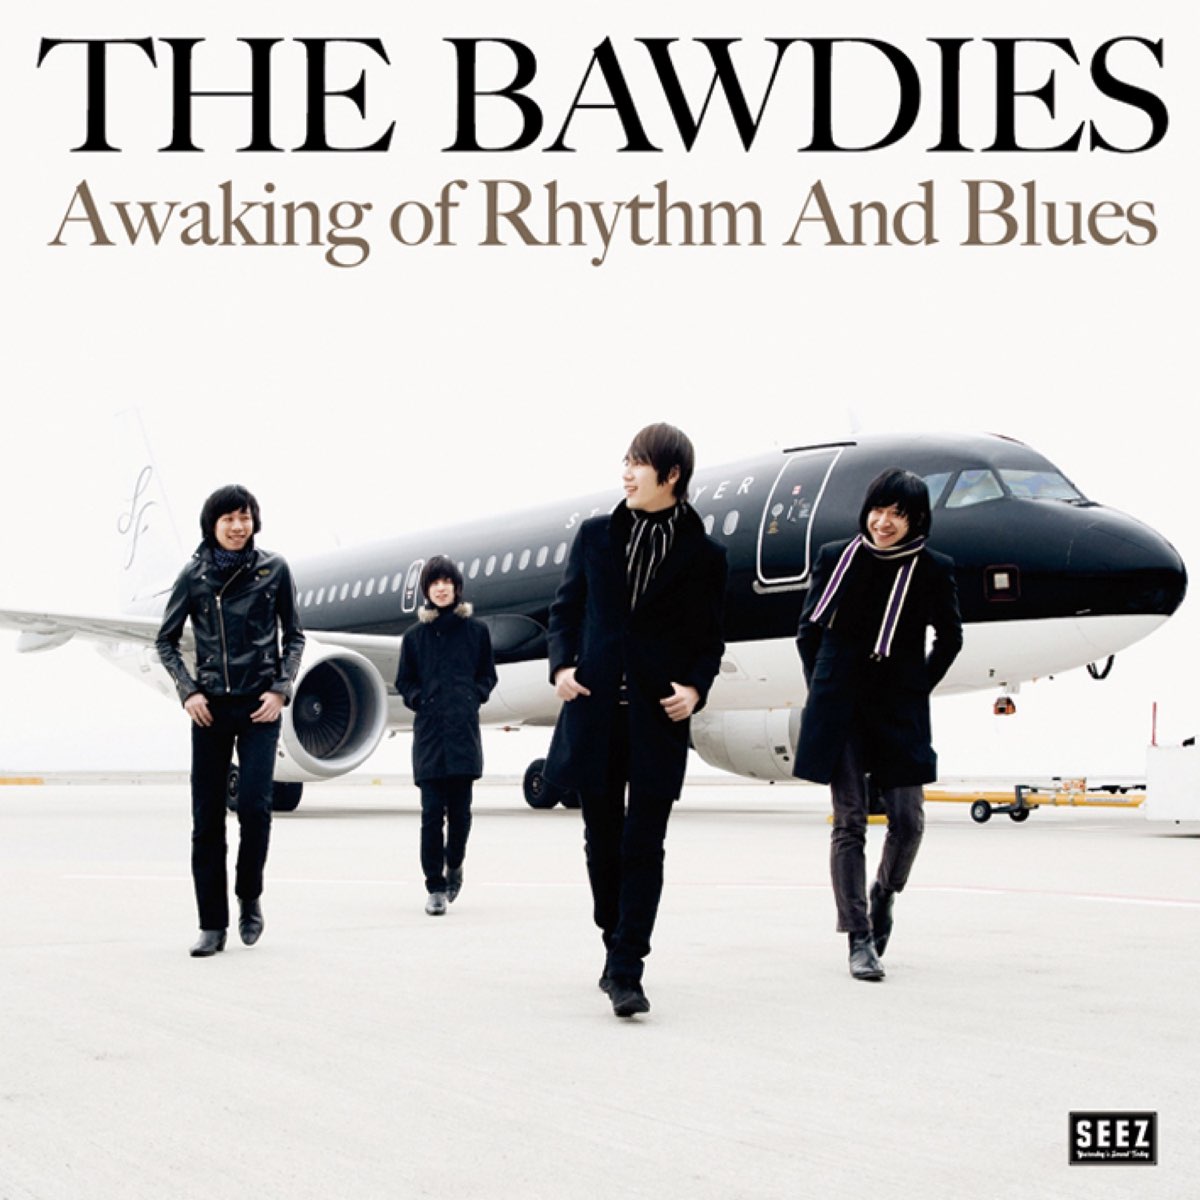 The Bawdiesの Awaking Of Rhythm And Blues をapple Musicで